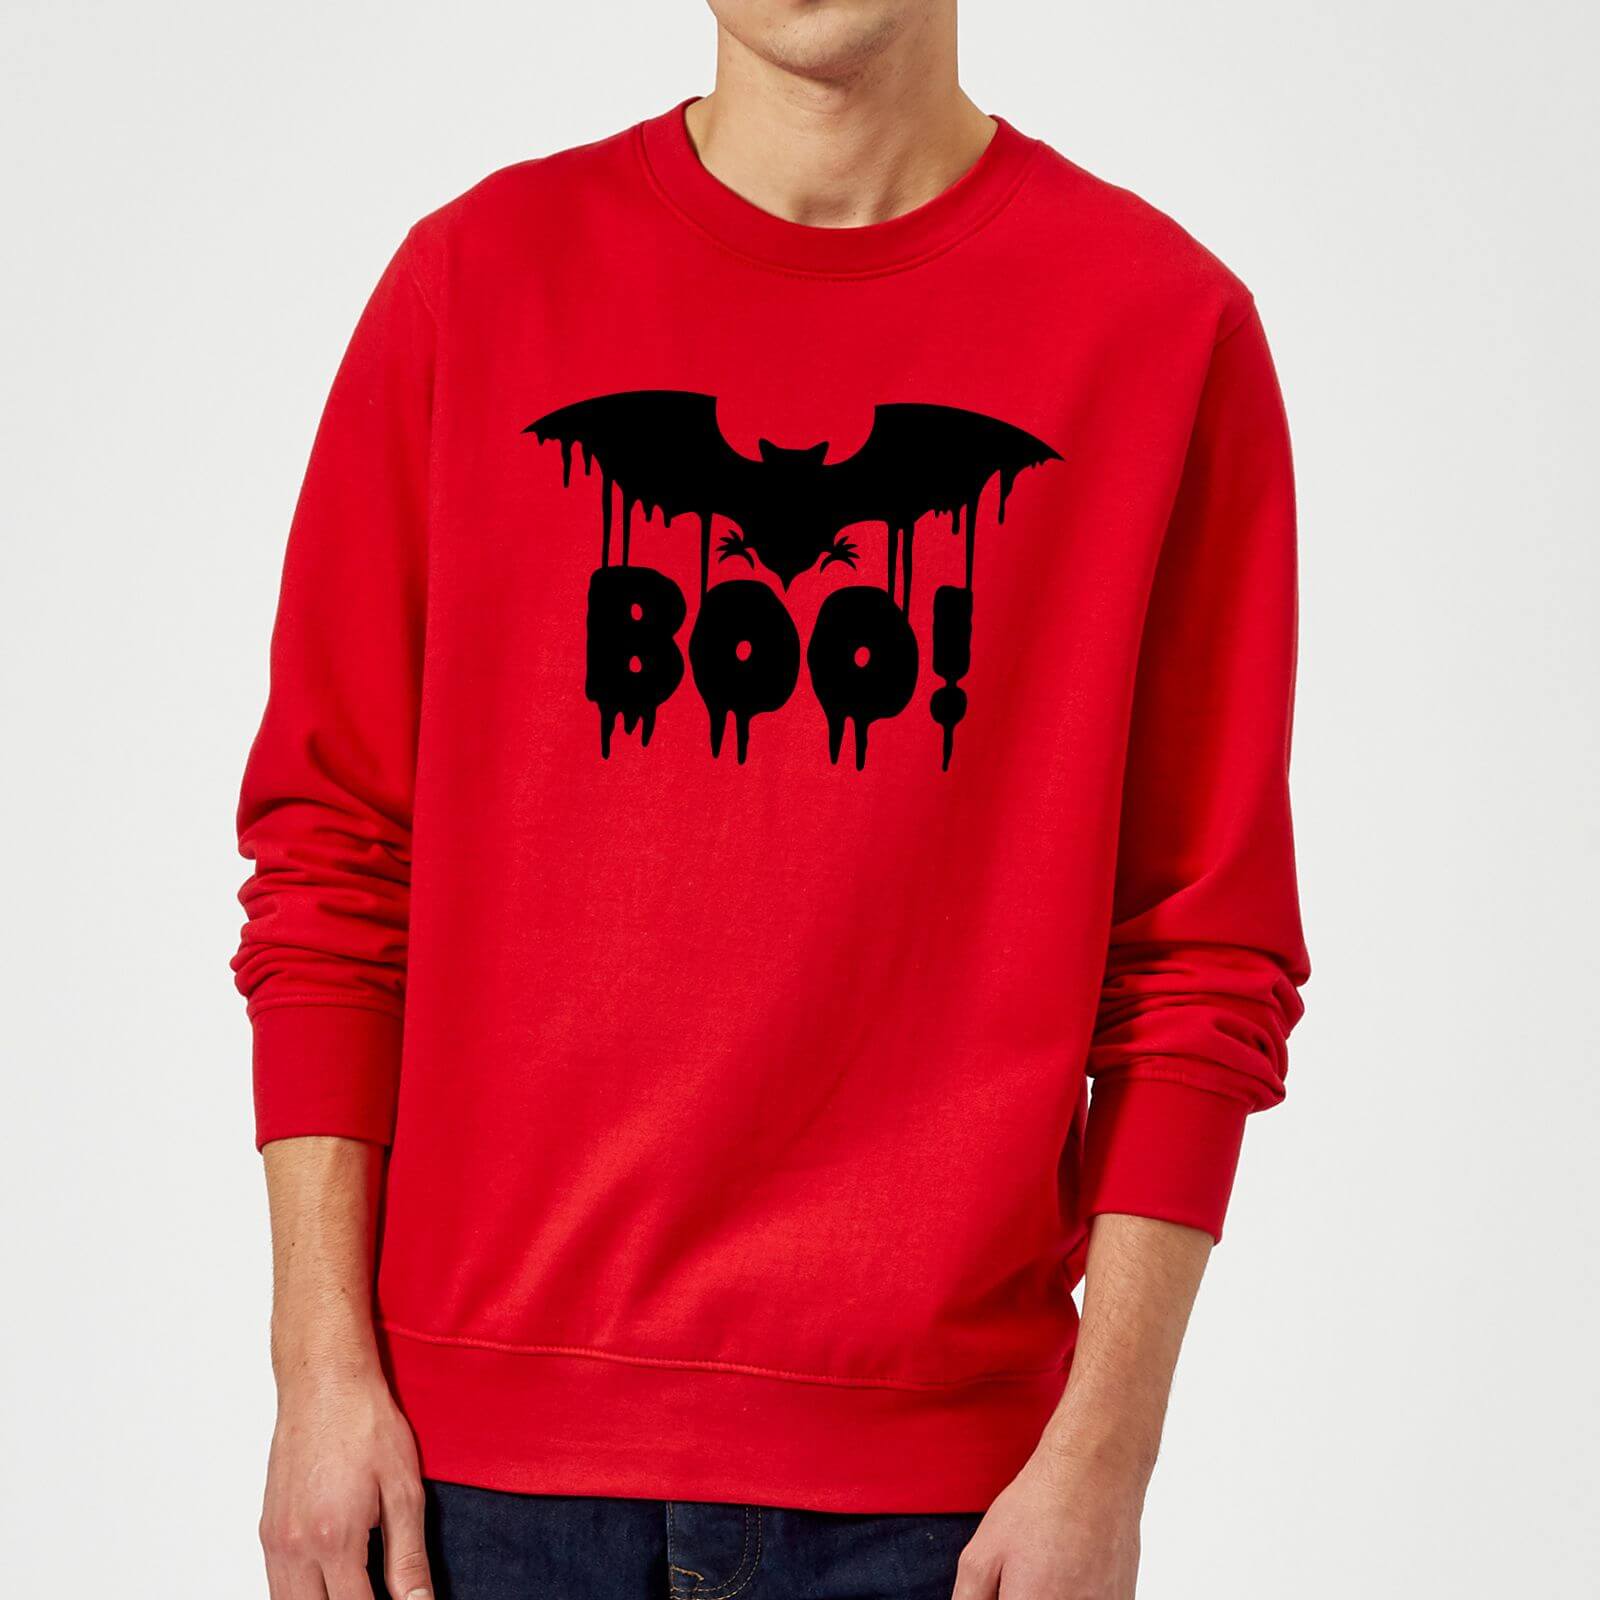 Boo Bat Sweatshirt - Red - M - Red